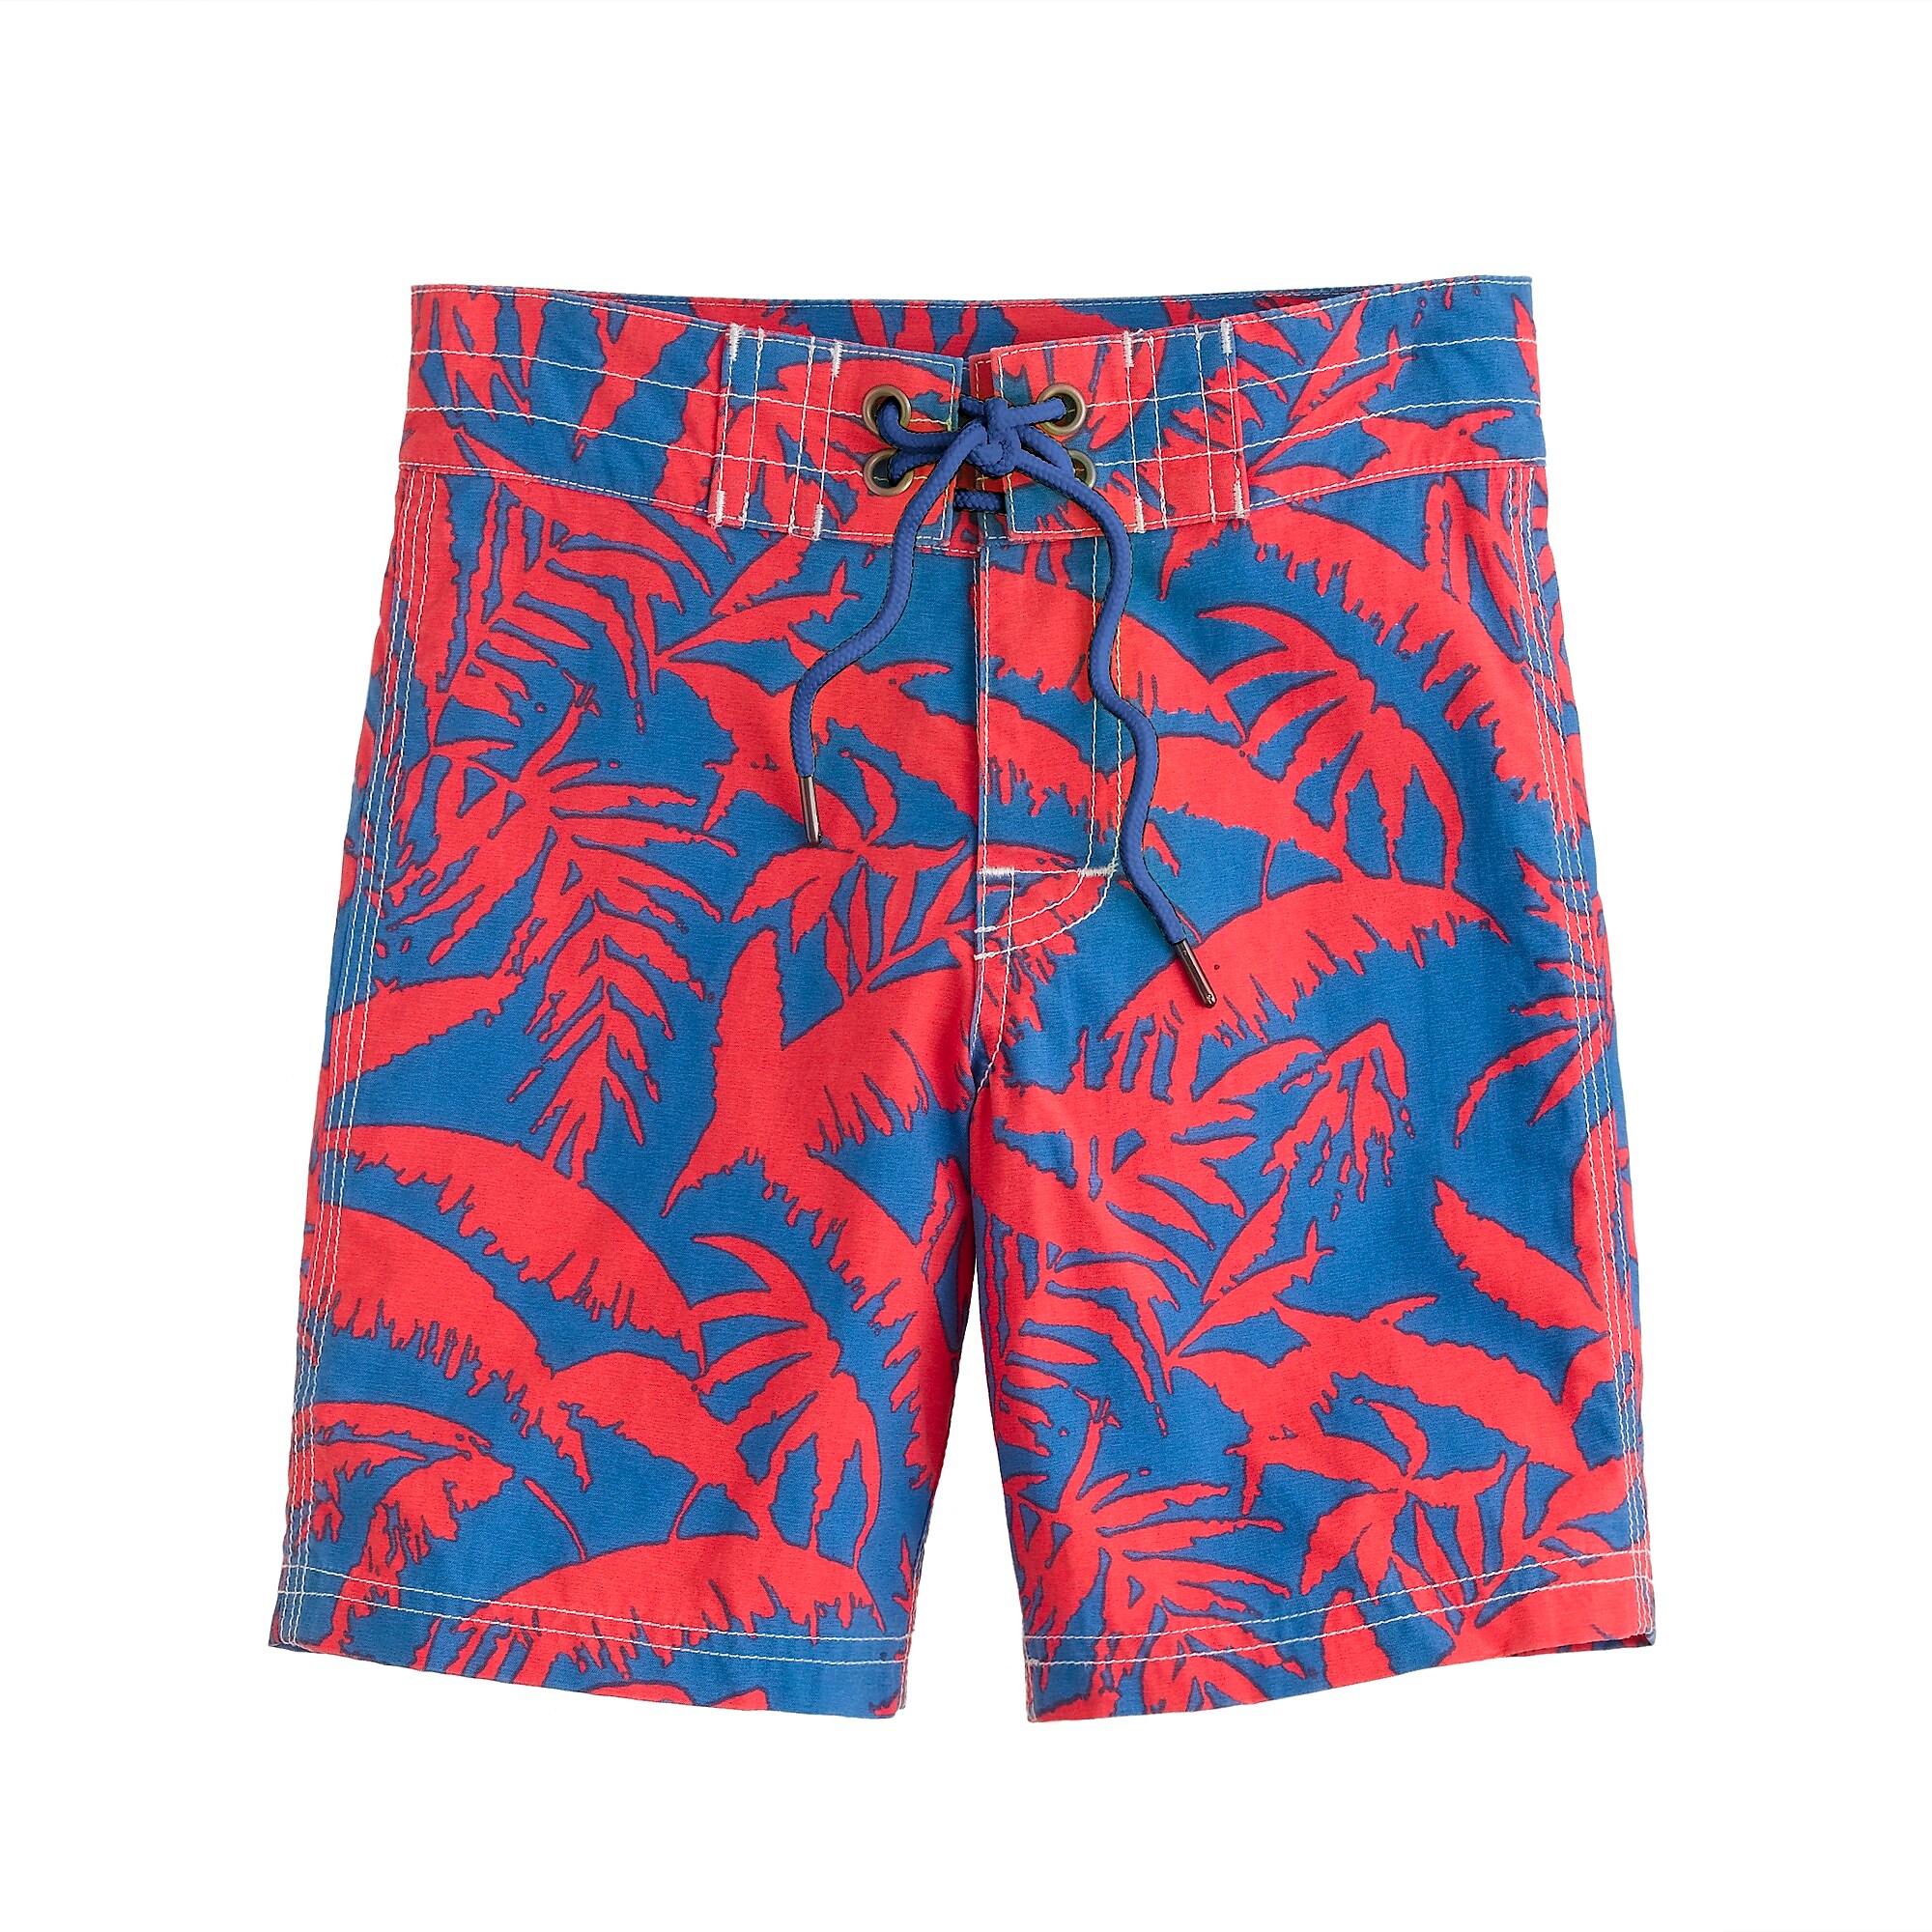 Boys' board shorts in neon palm tree print : Boy board shorts | J.Crew